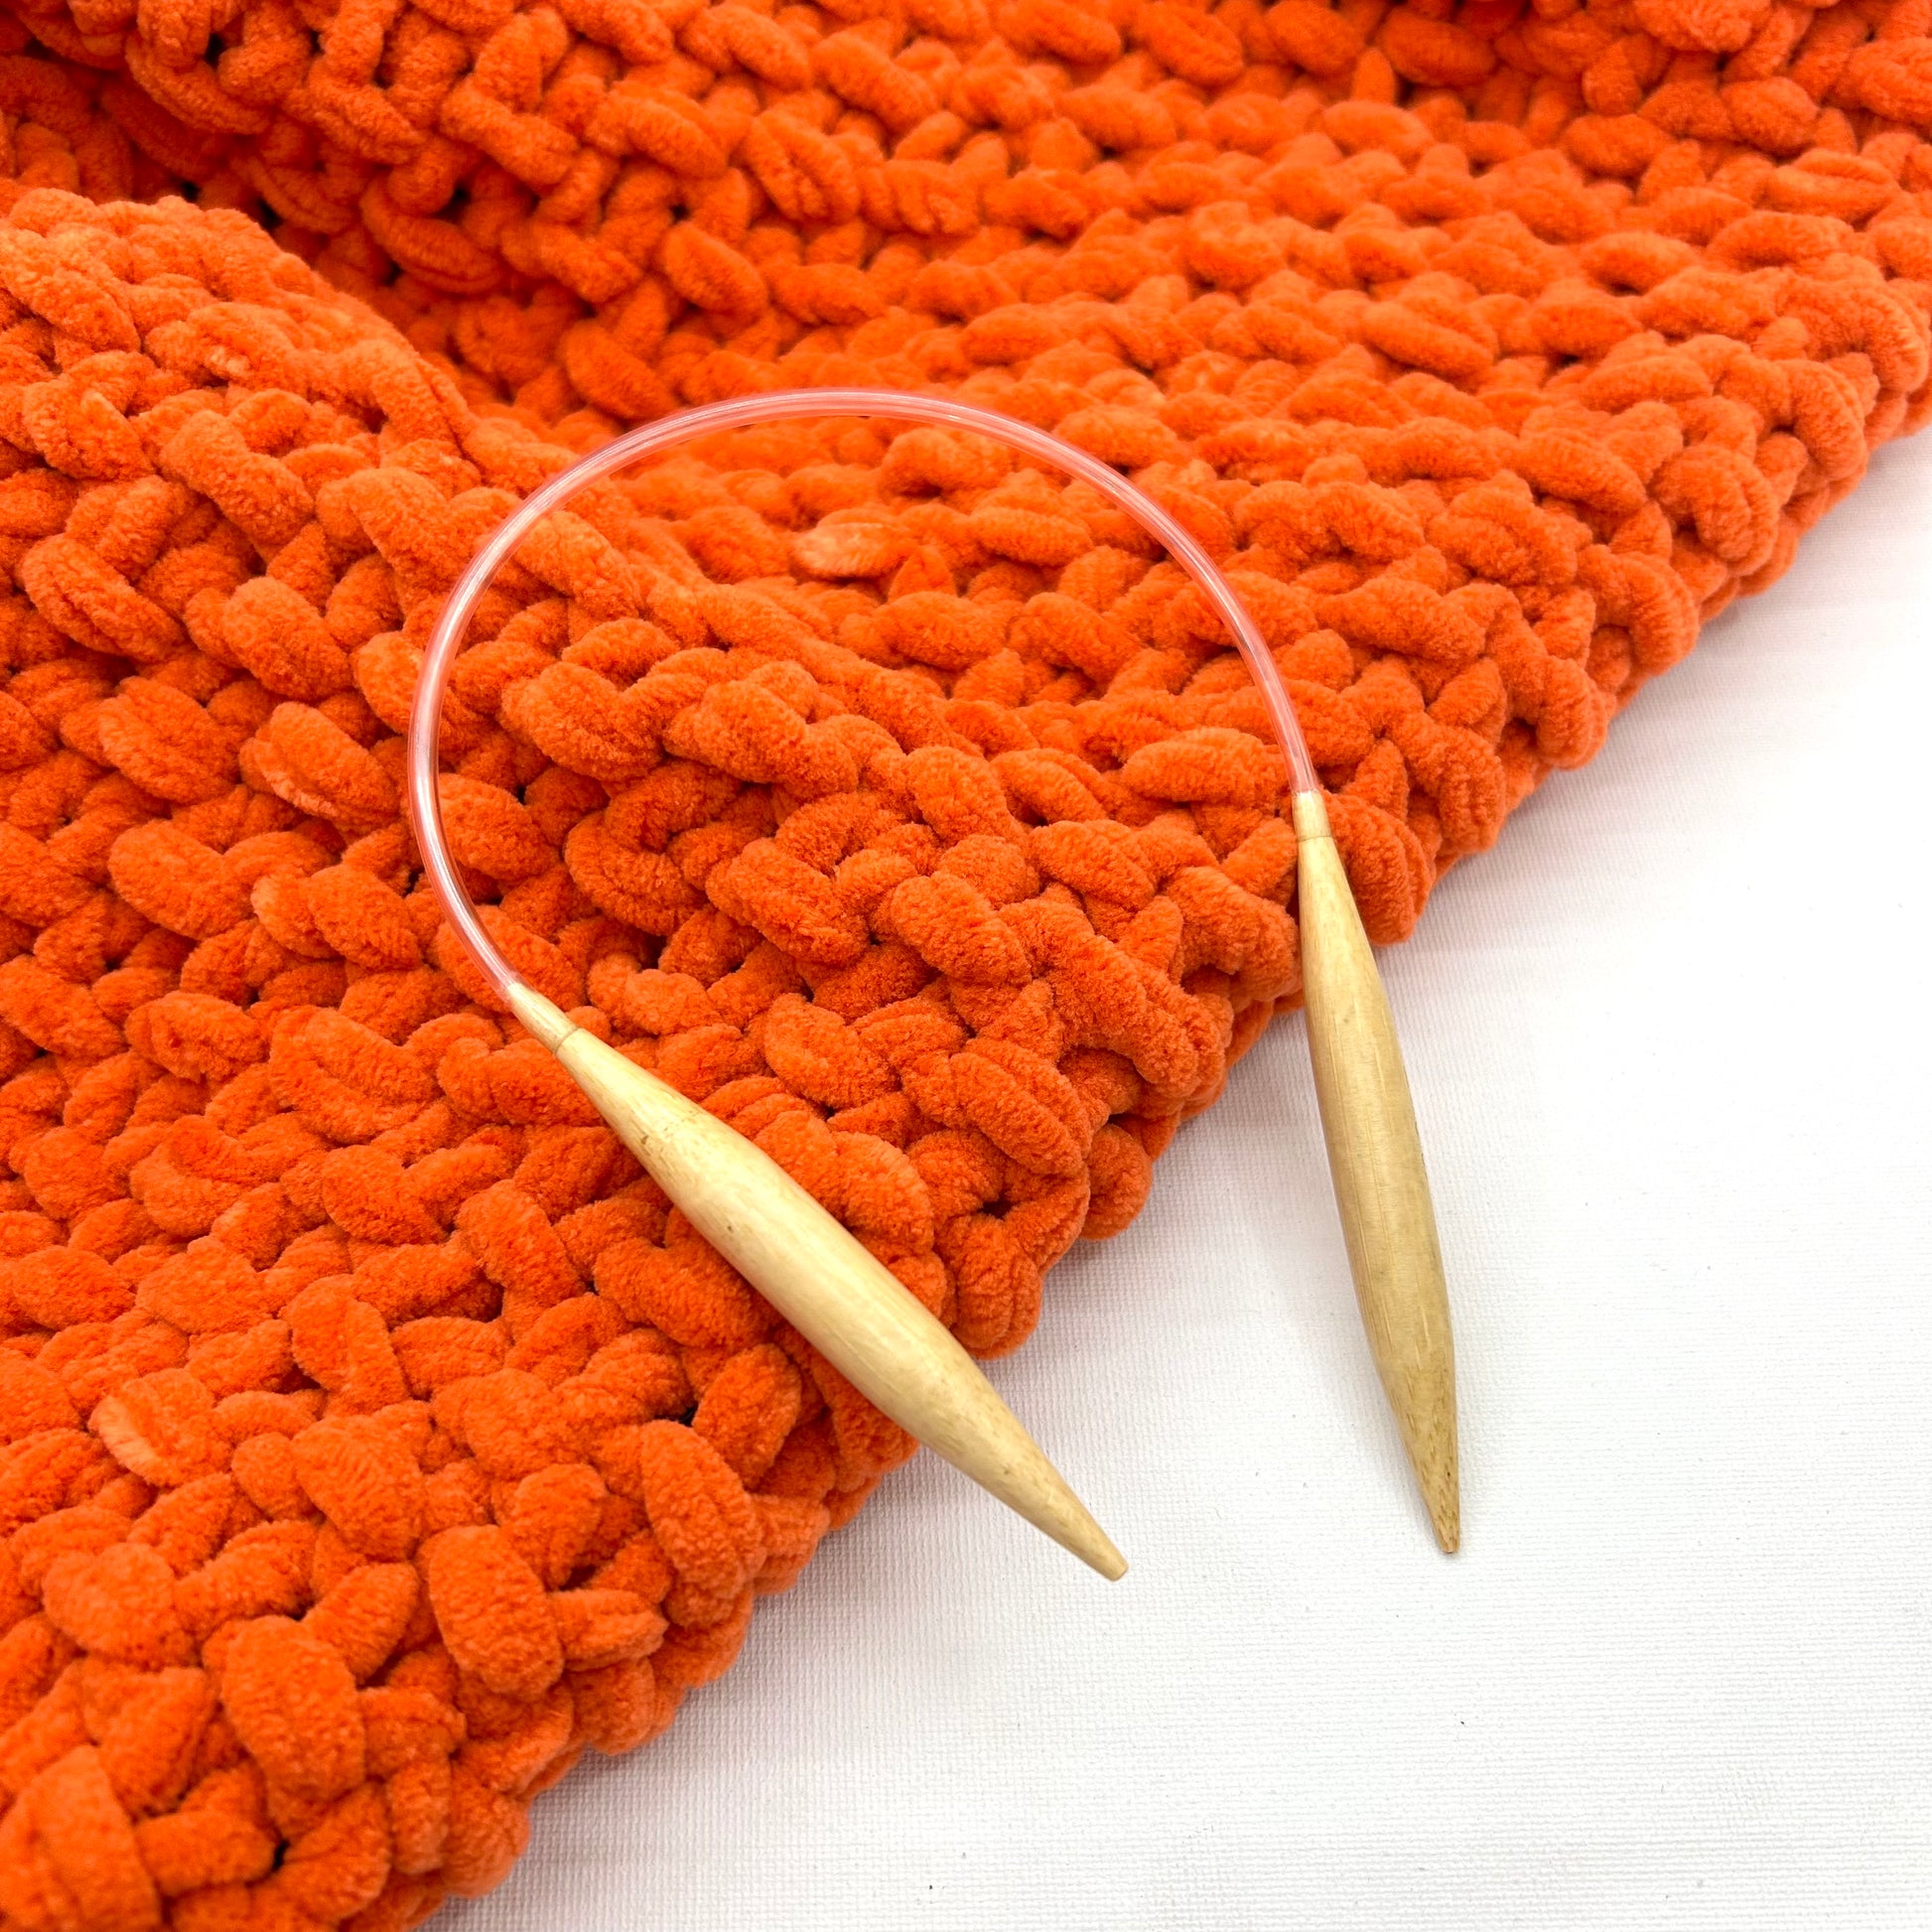 12mm short circular knitting needles